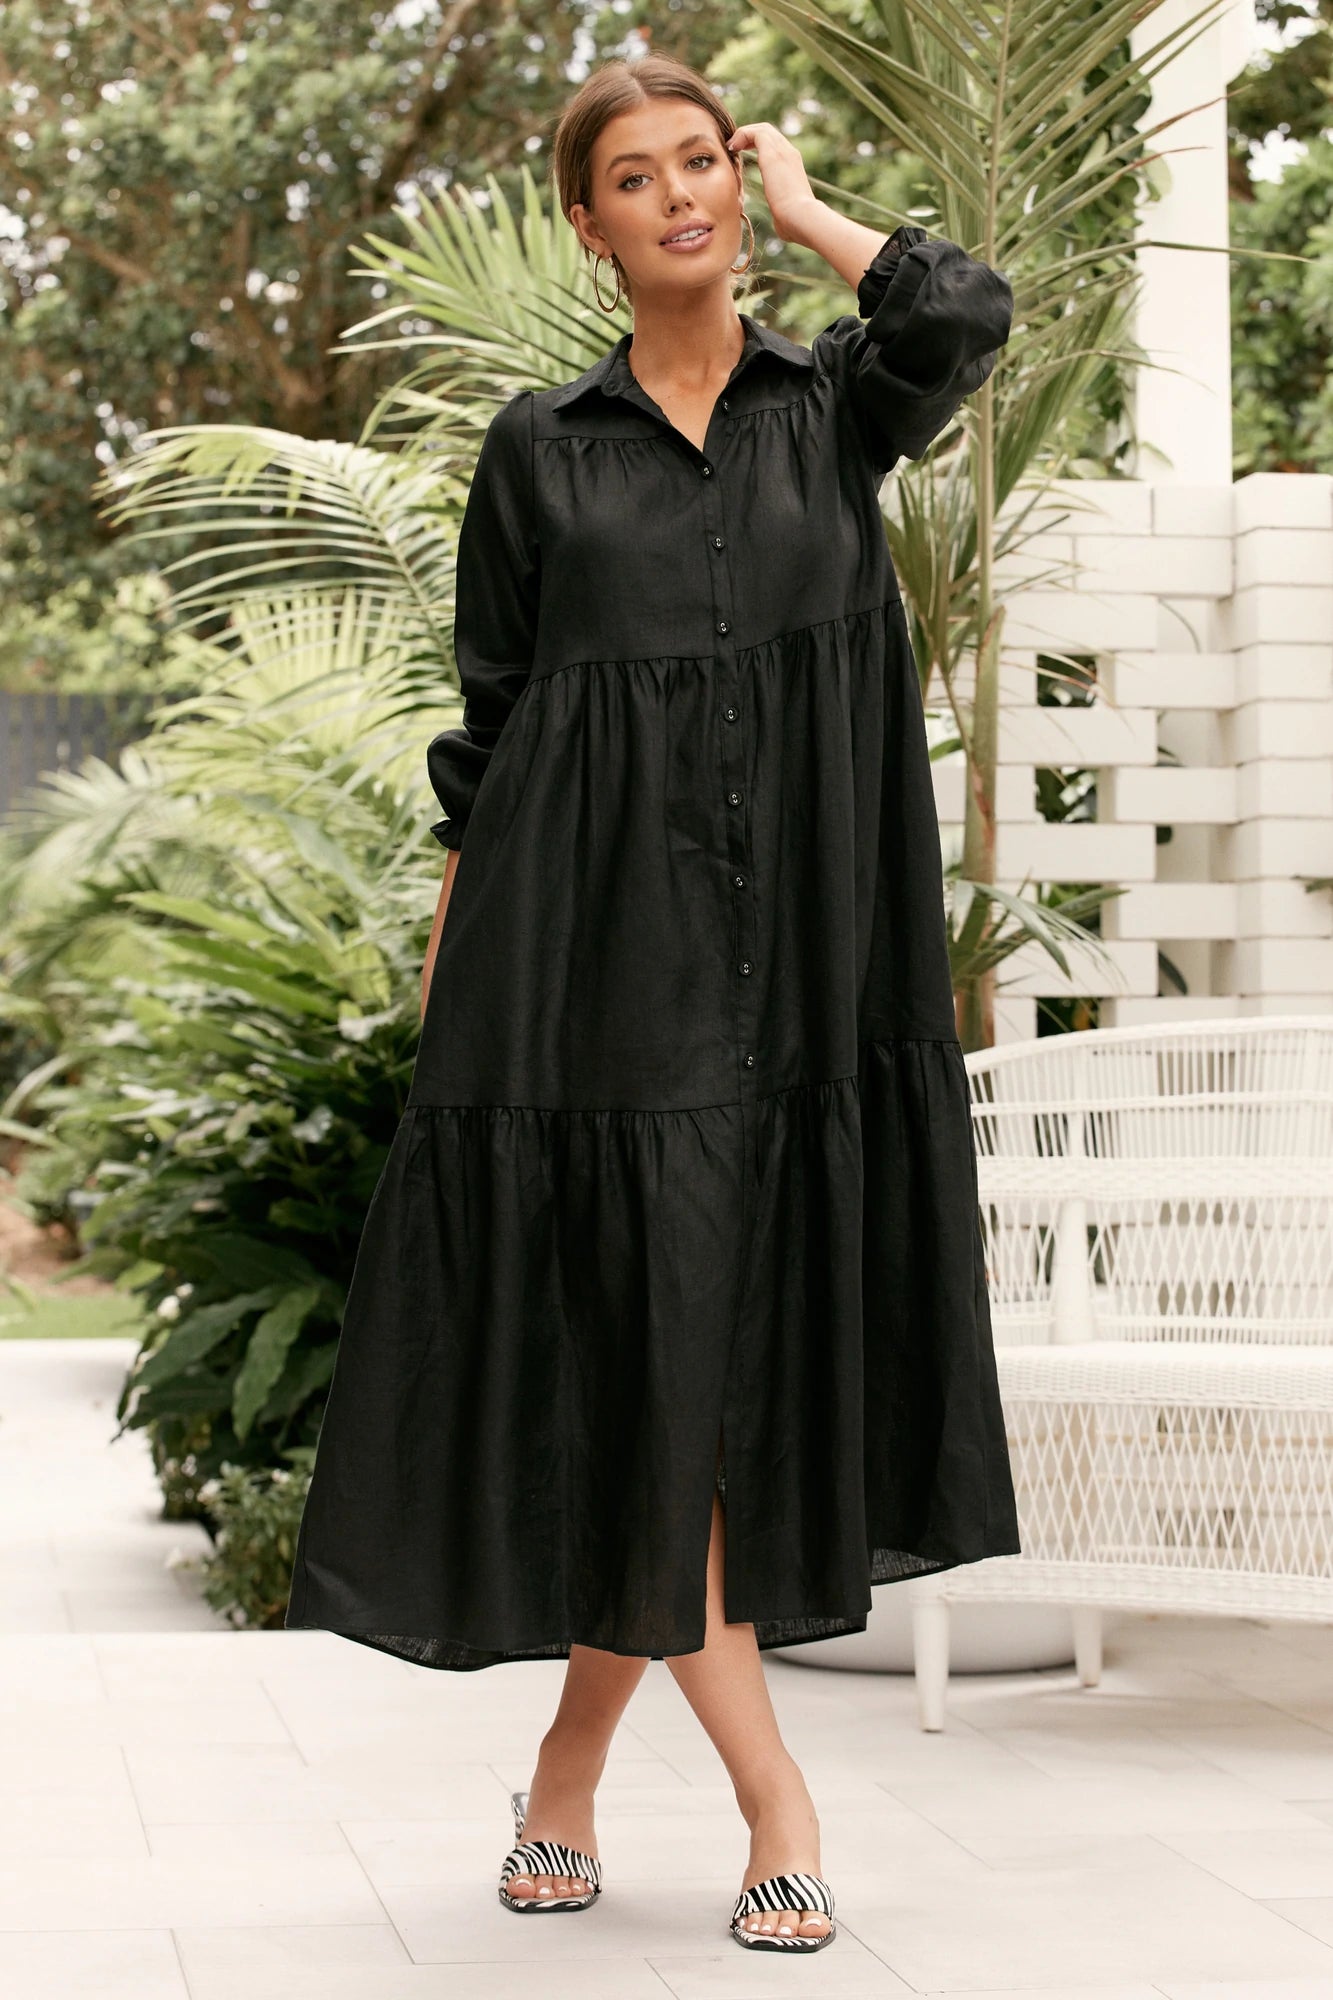 Kinley Black Linen Tiered Dress